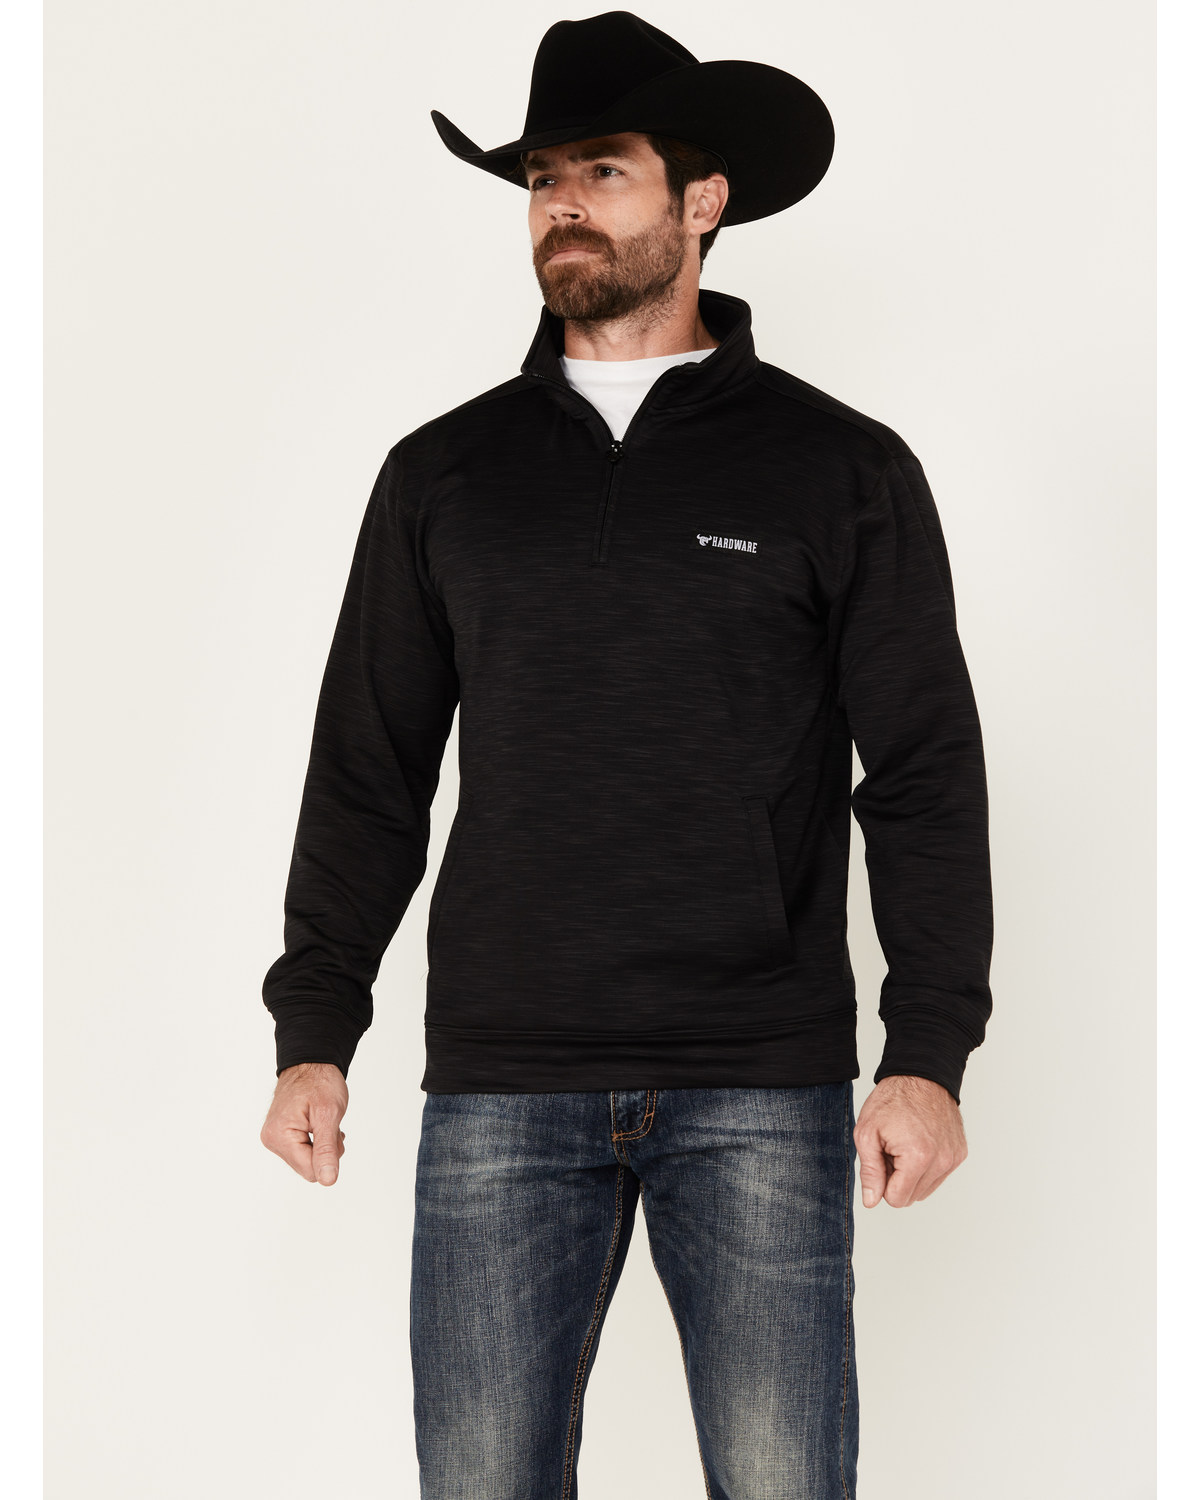 Cowboy Hardware Men's Cadet Stretch Zip Pullover